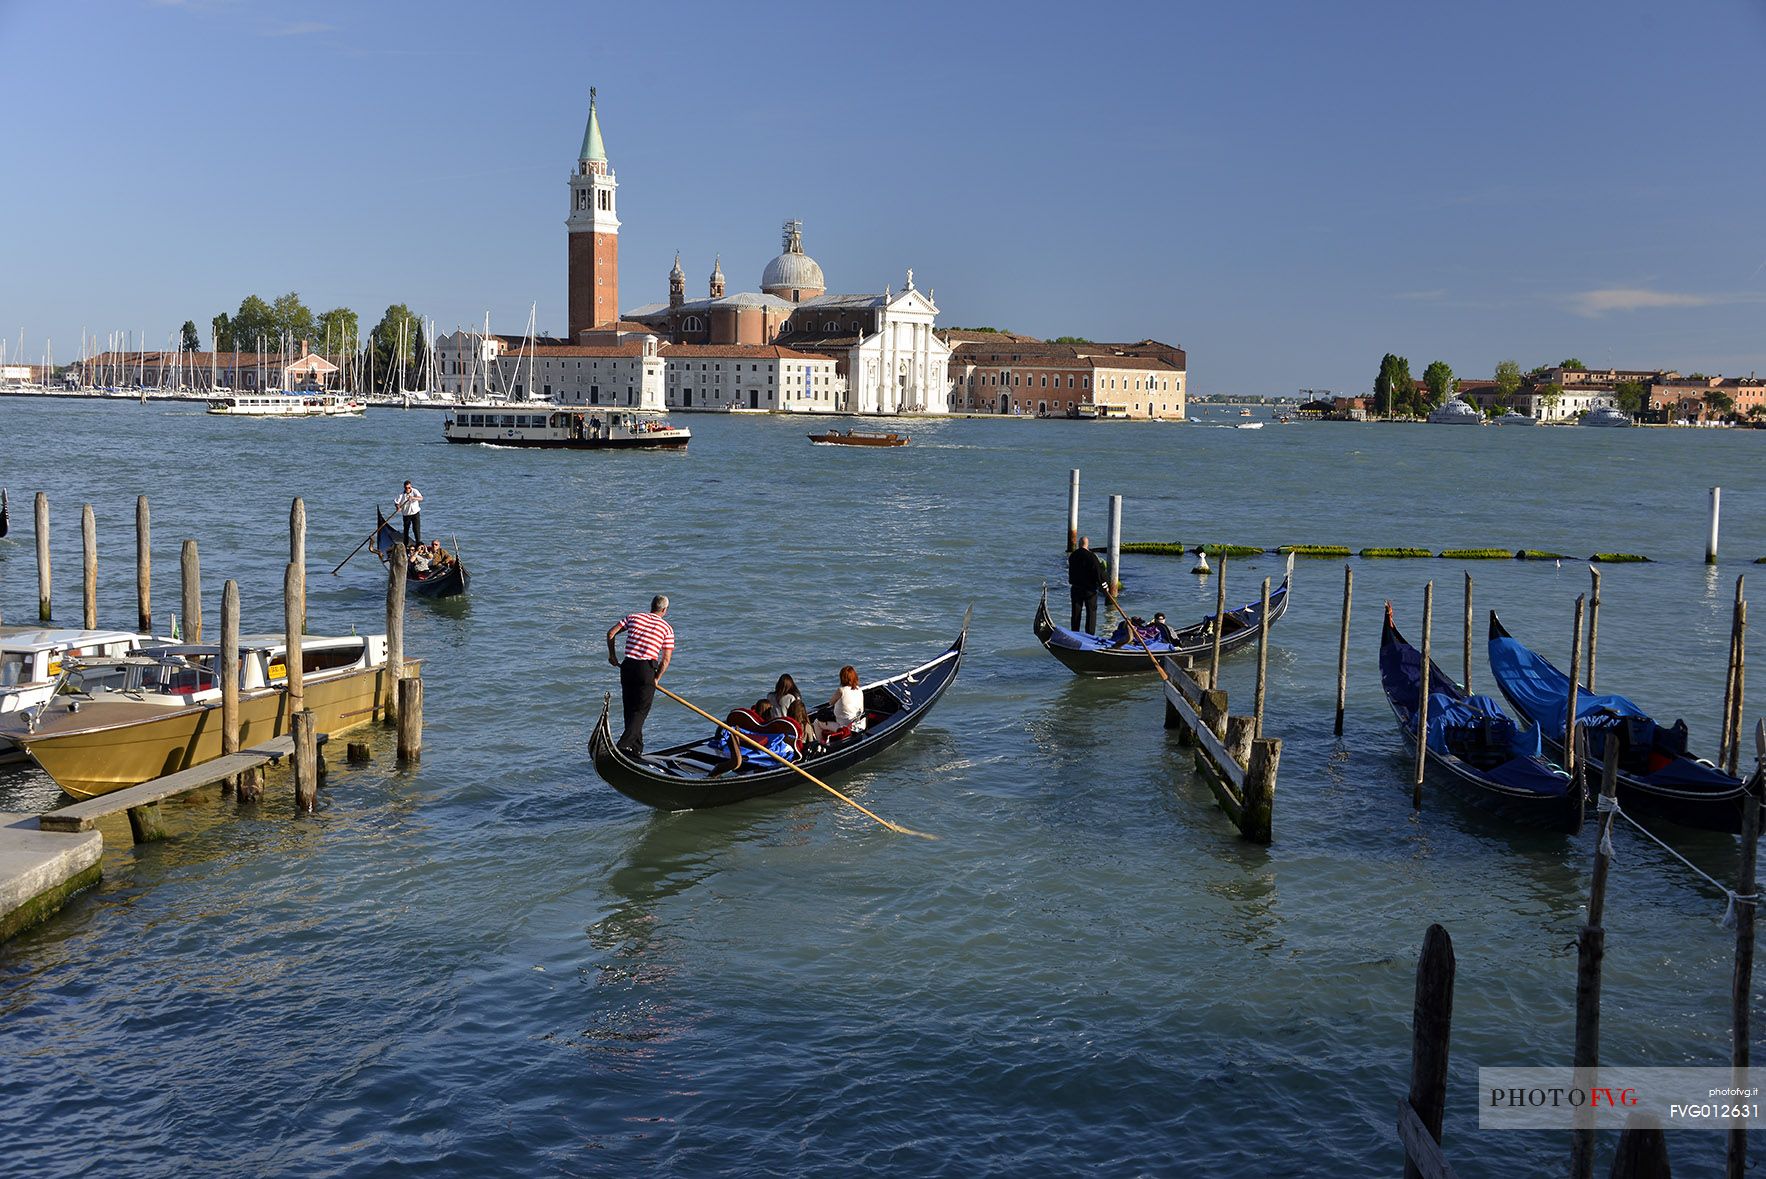 Gondolas in the San Marco basin